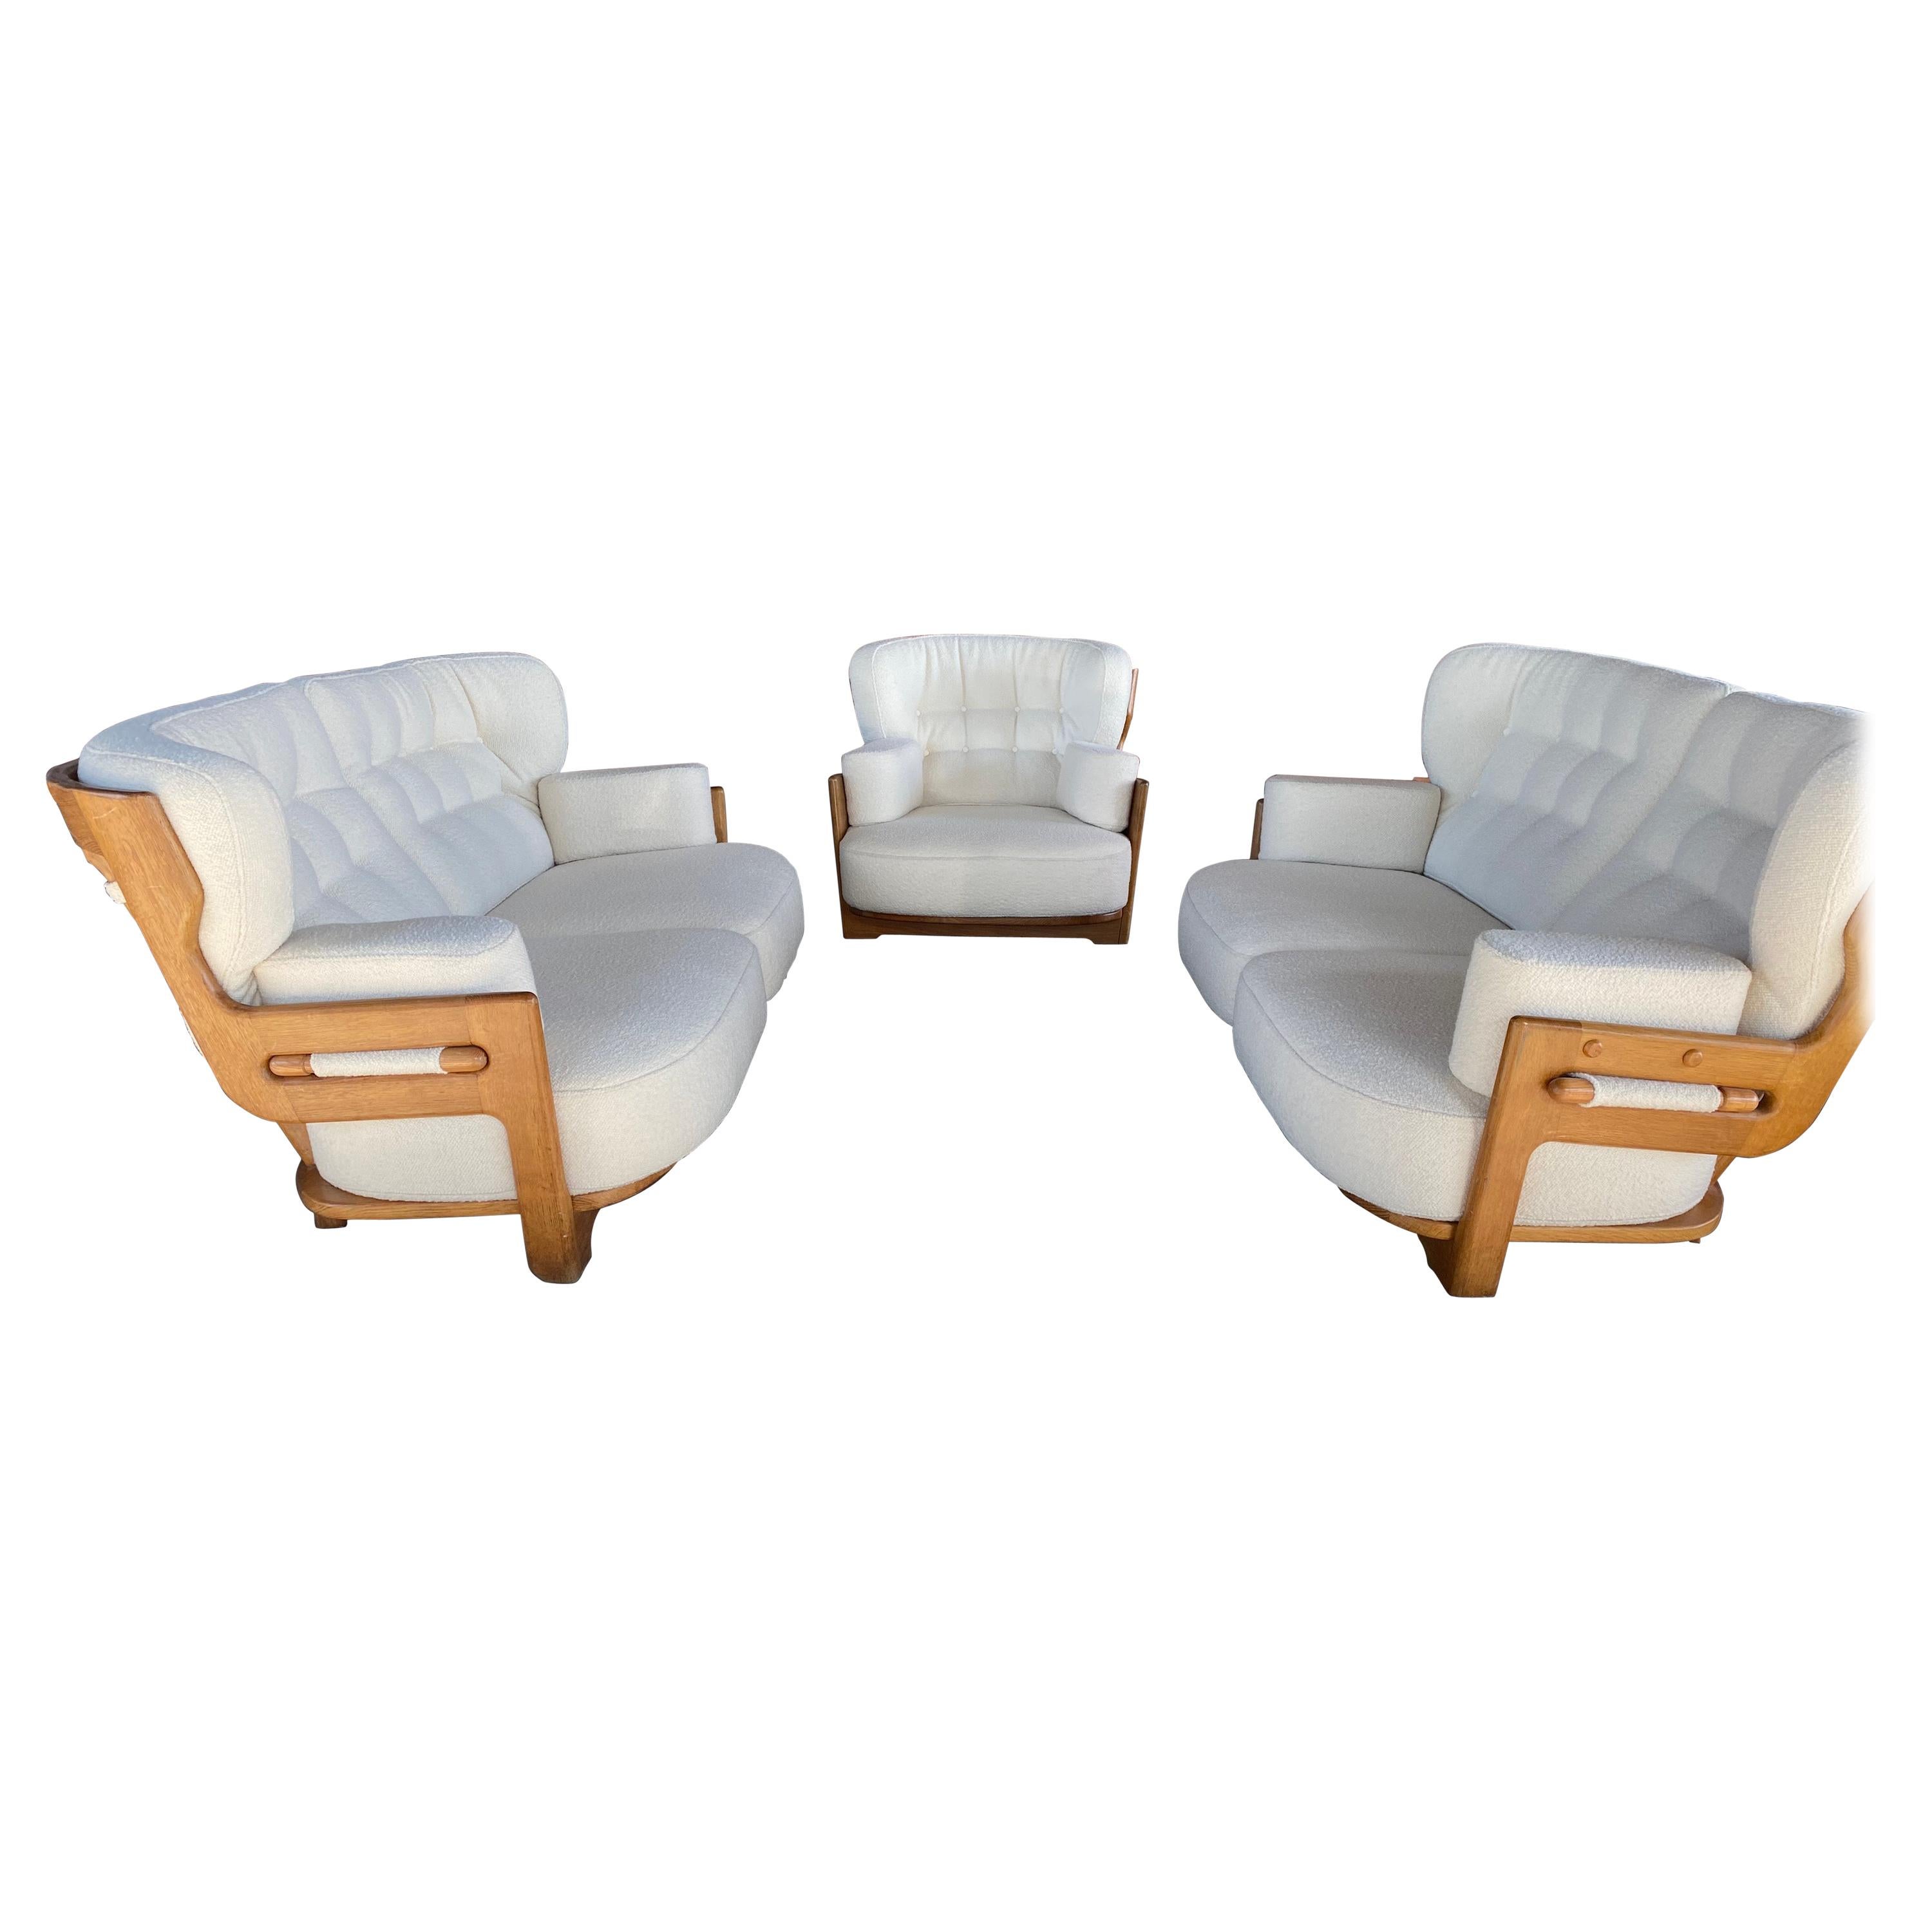 Guillerme & Chambron, Votre Maison, Sofas & Lounge Chair, Fabric and Oak, 1960s For Sale